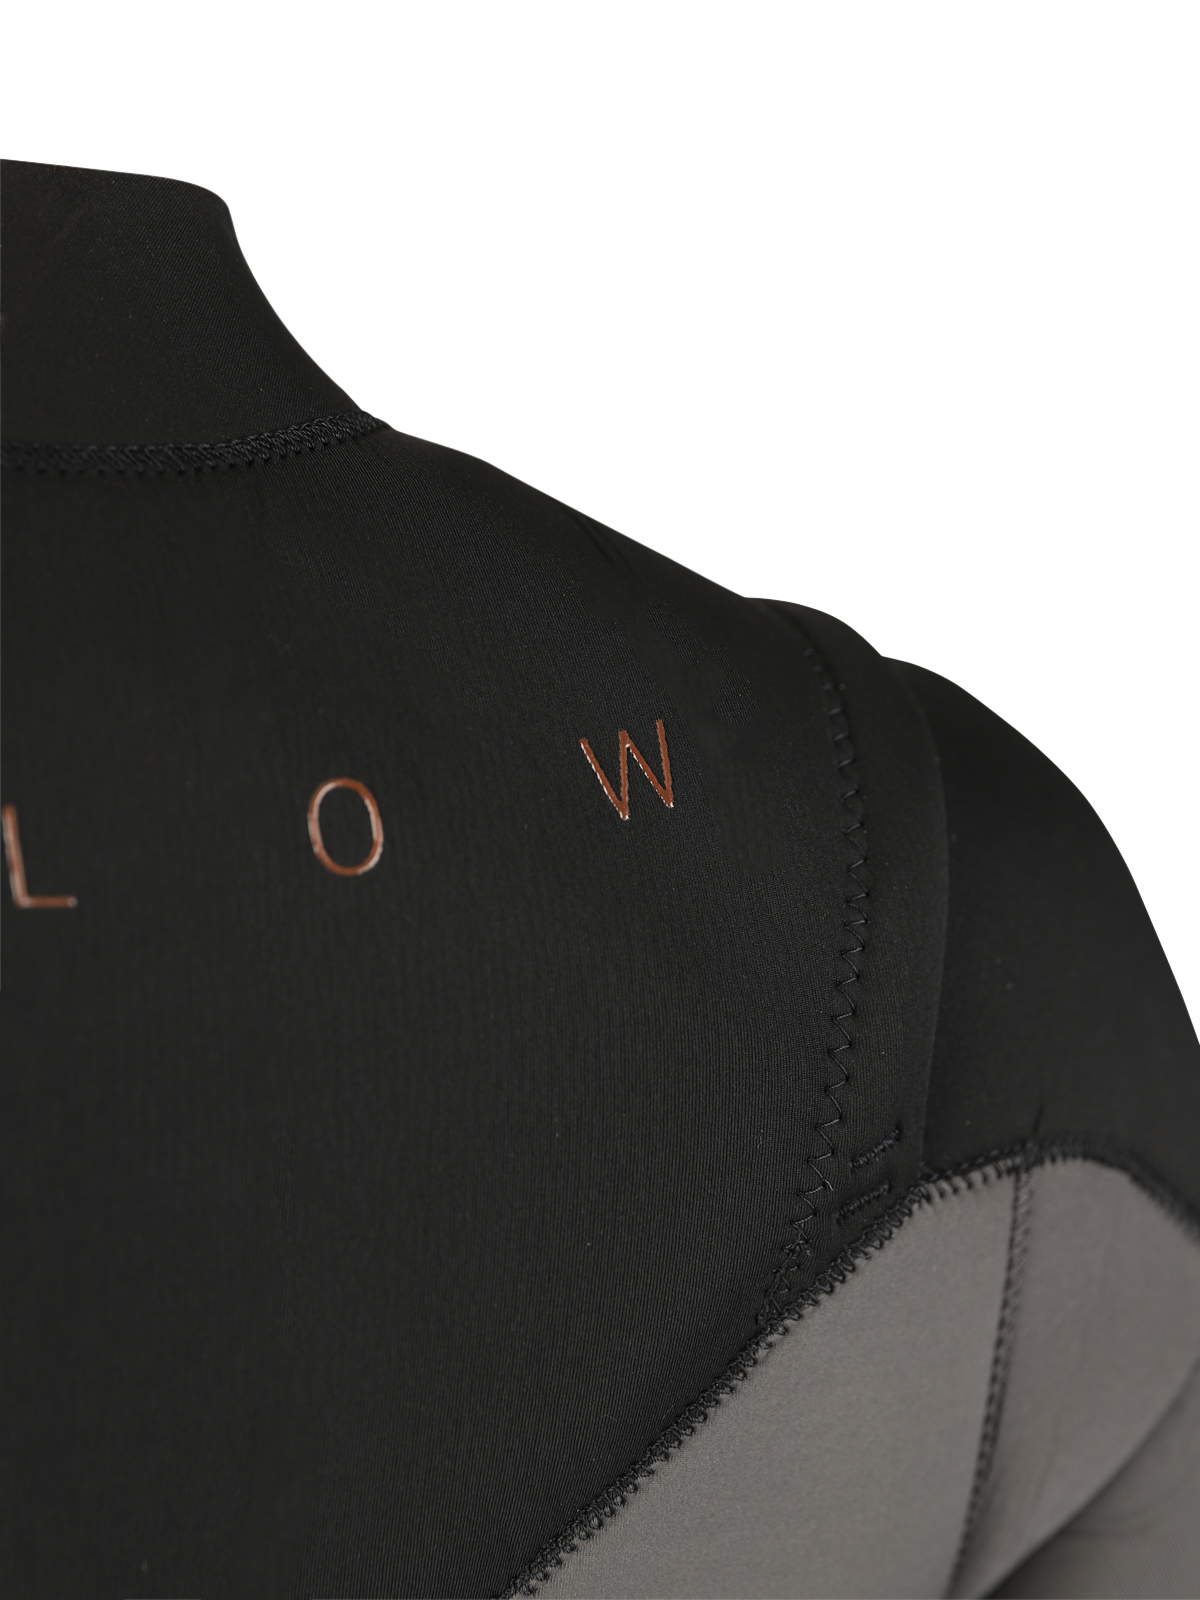 Glow Fullsuit 5/3 mm Women Wetsuit | Grey